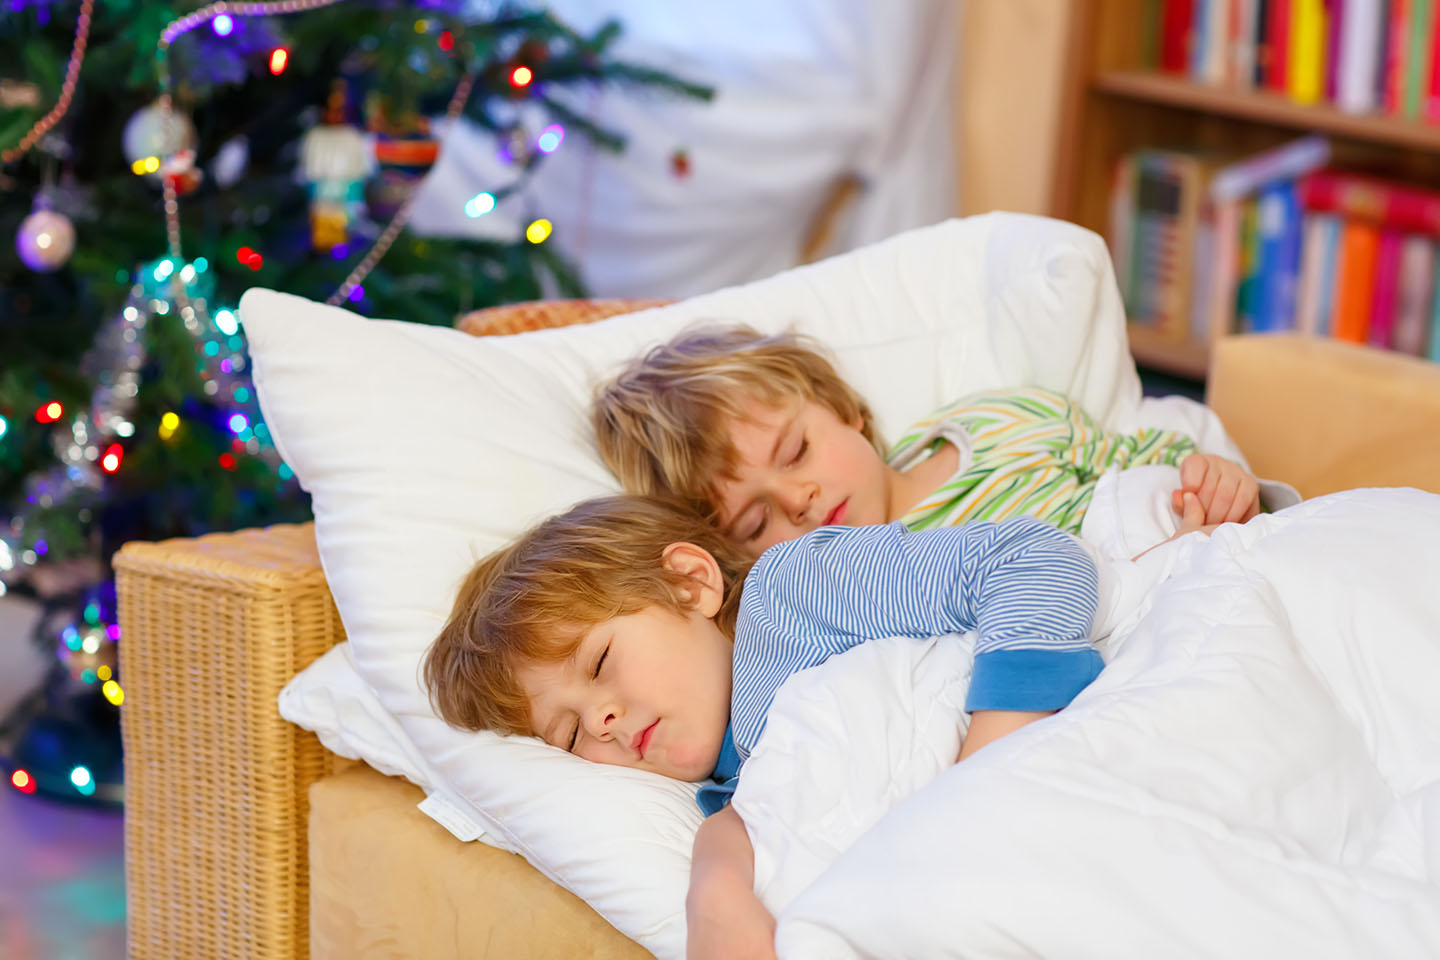 web-siblings-sleeping-bed-shutterstock_495907156-romrodphoto-ai